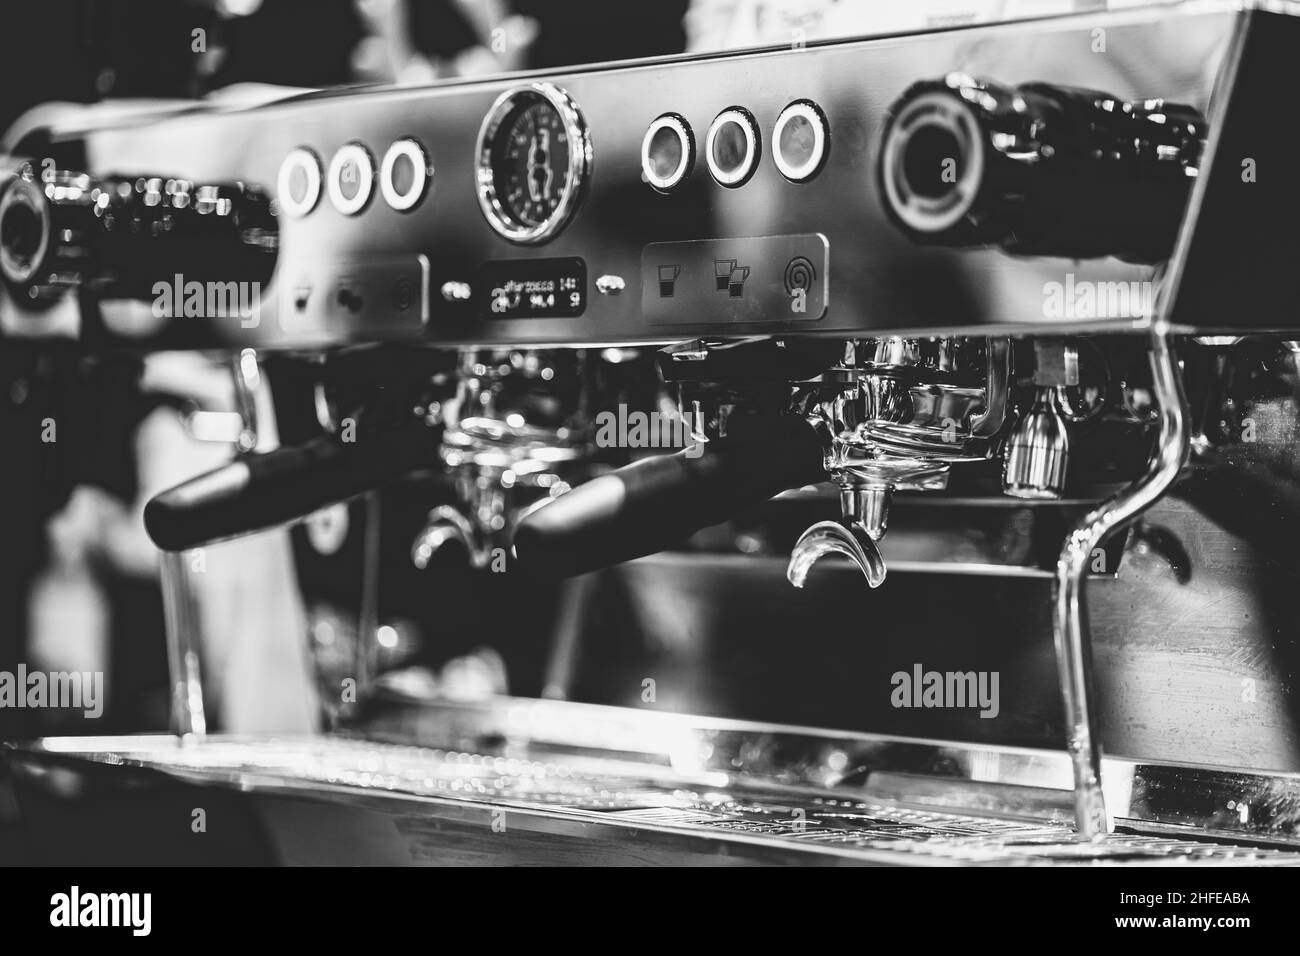 Italian Espresso machine black and white vintage color style Stock Photo